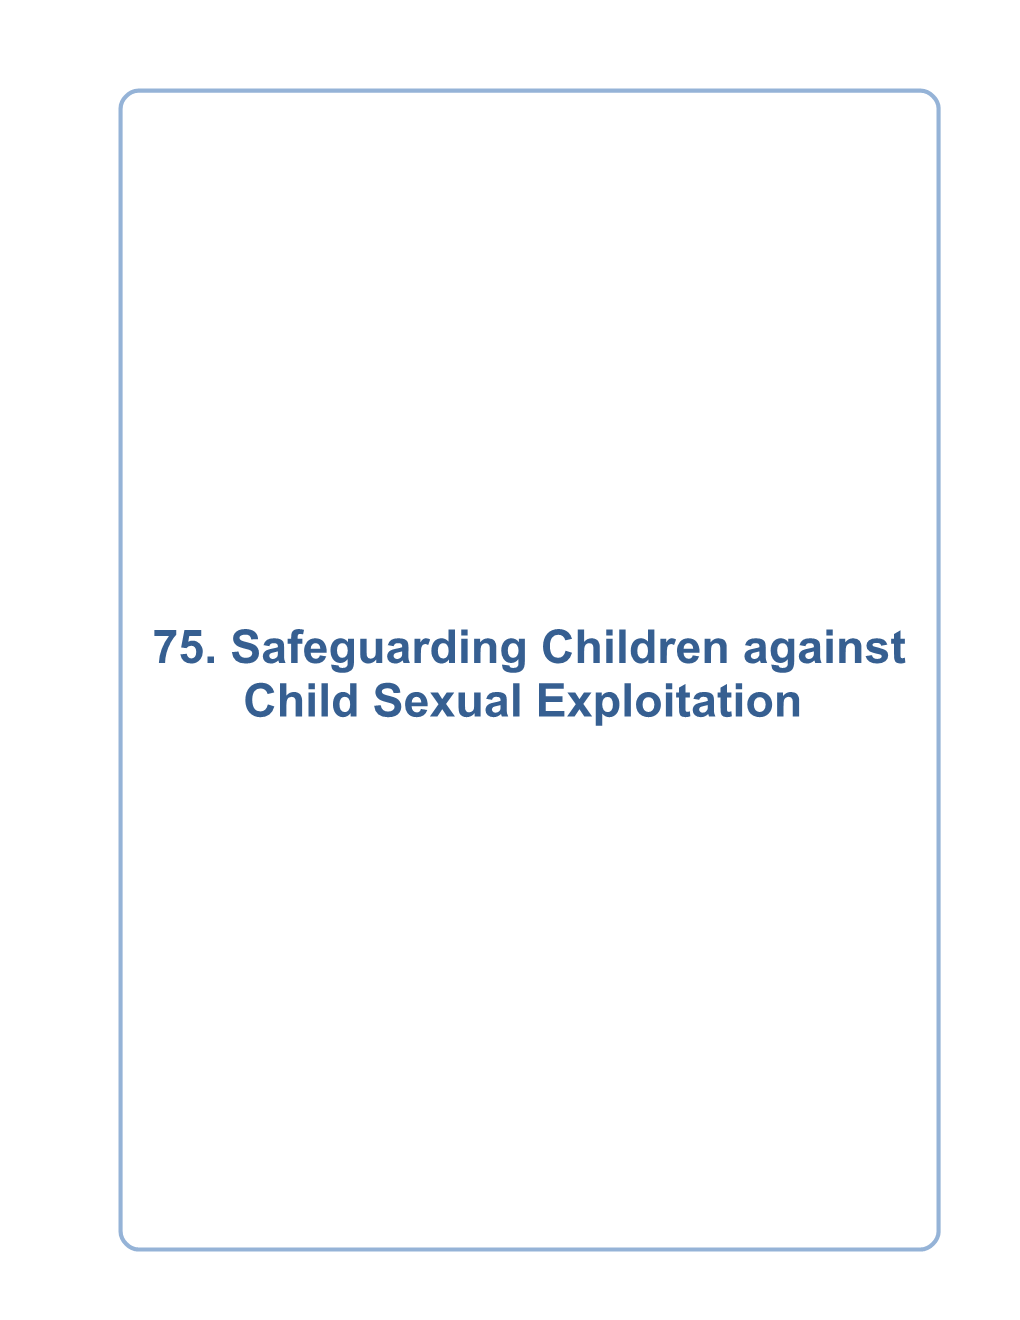 Safeguarding Children from CSE